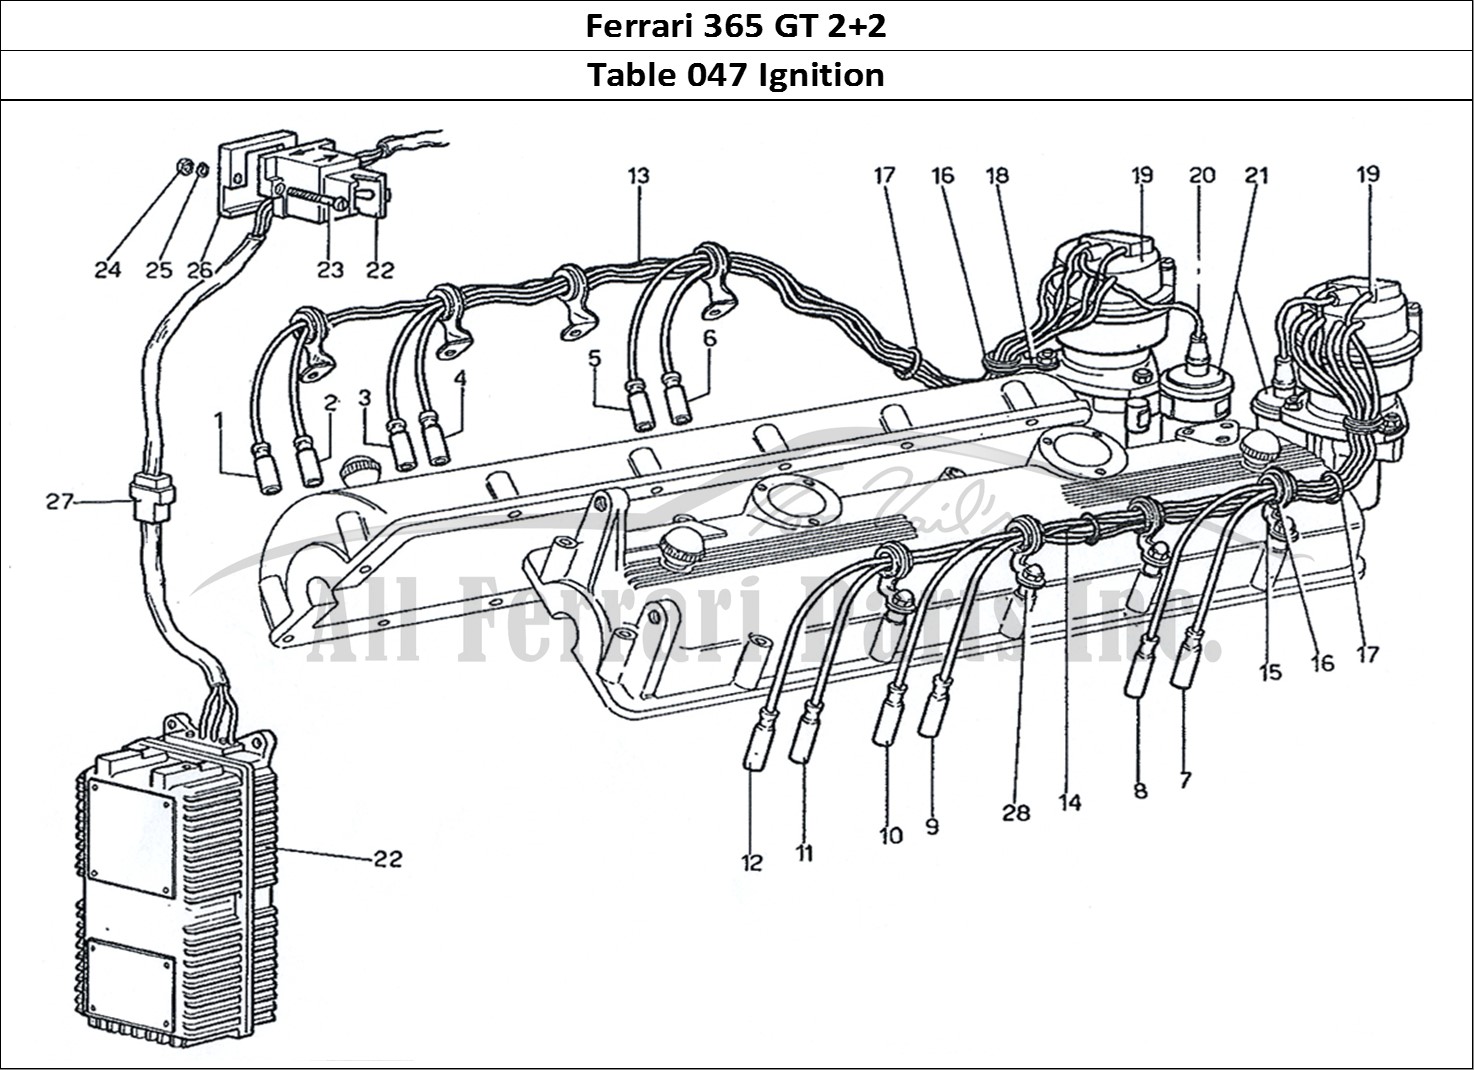 Ferrari Parts Ferrari 365 GT 2+2 (Mechanical) Page 047 Ignition